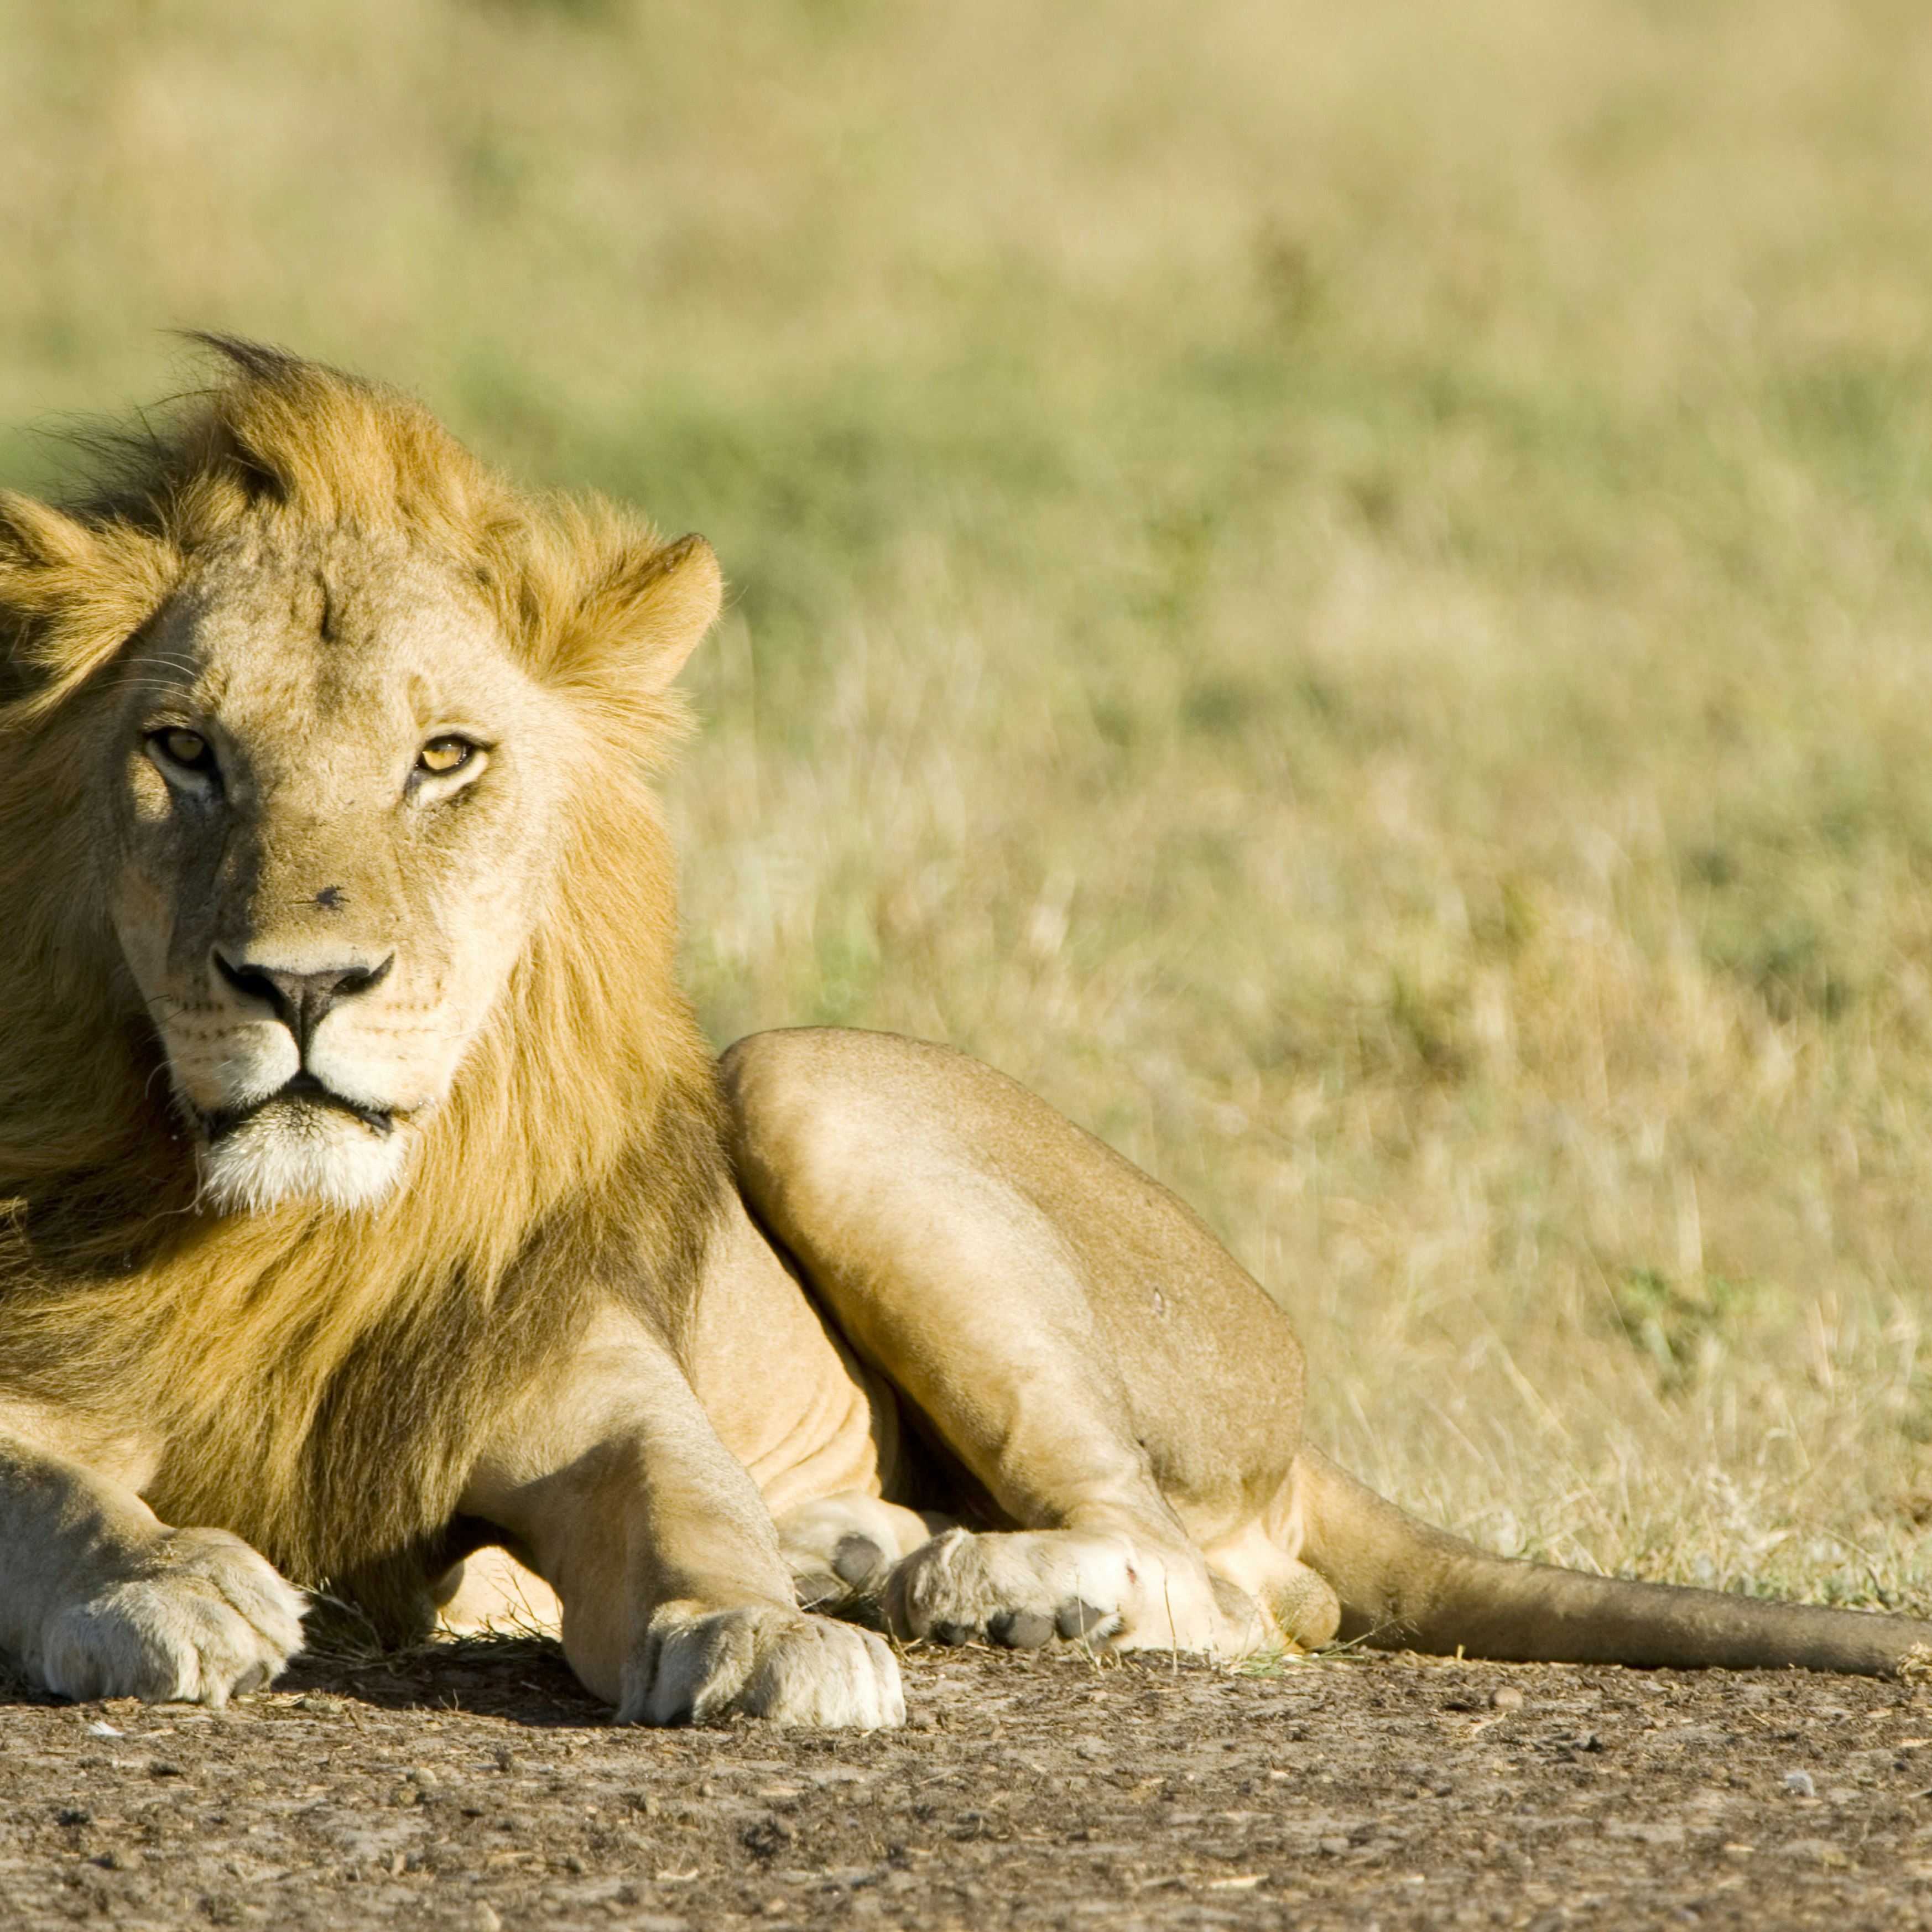 Lion, Panthera leo, male Kalahari lion resting, Central Kalahari Game Reserve, Botswana - stock photo
